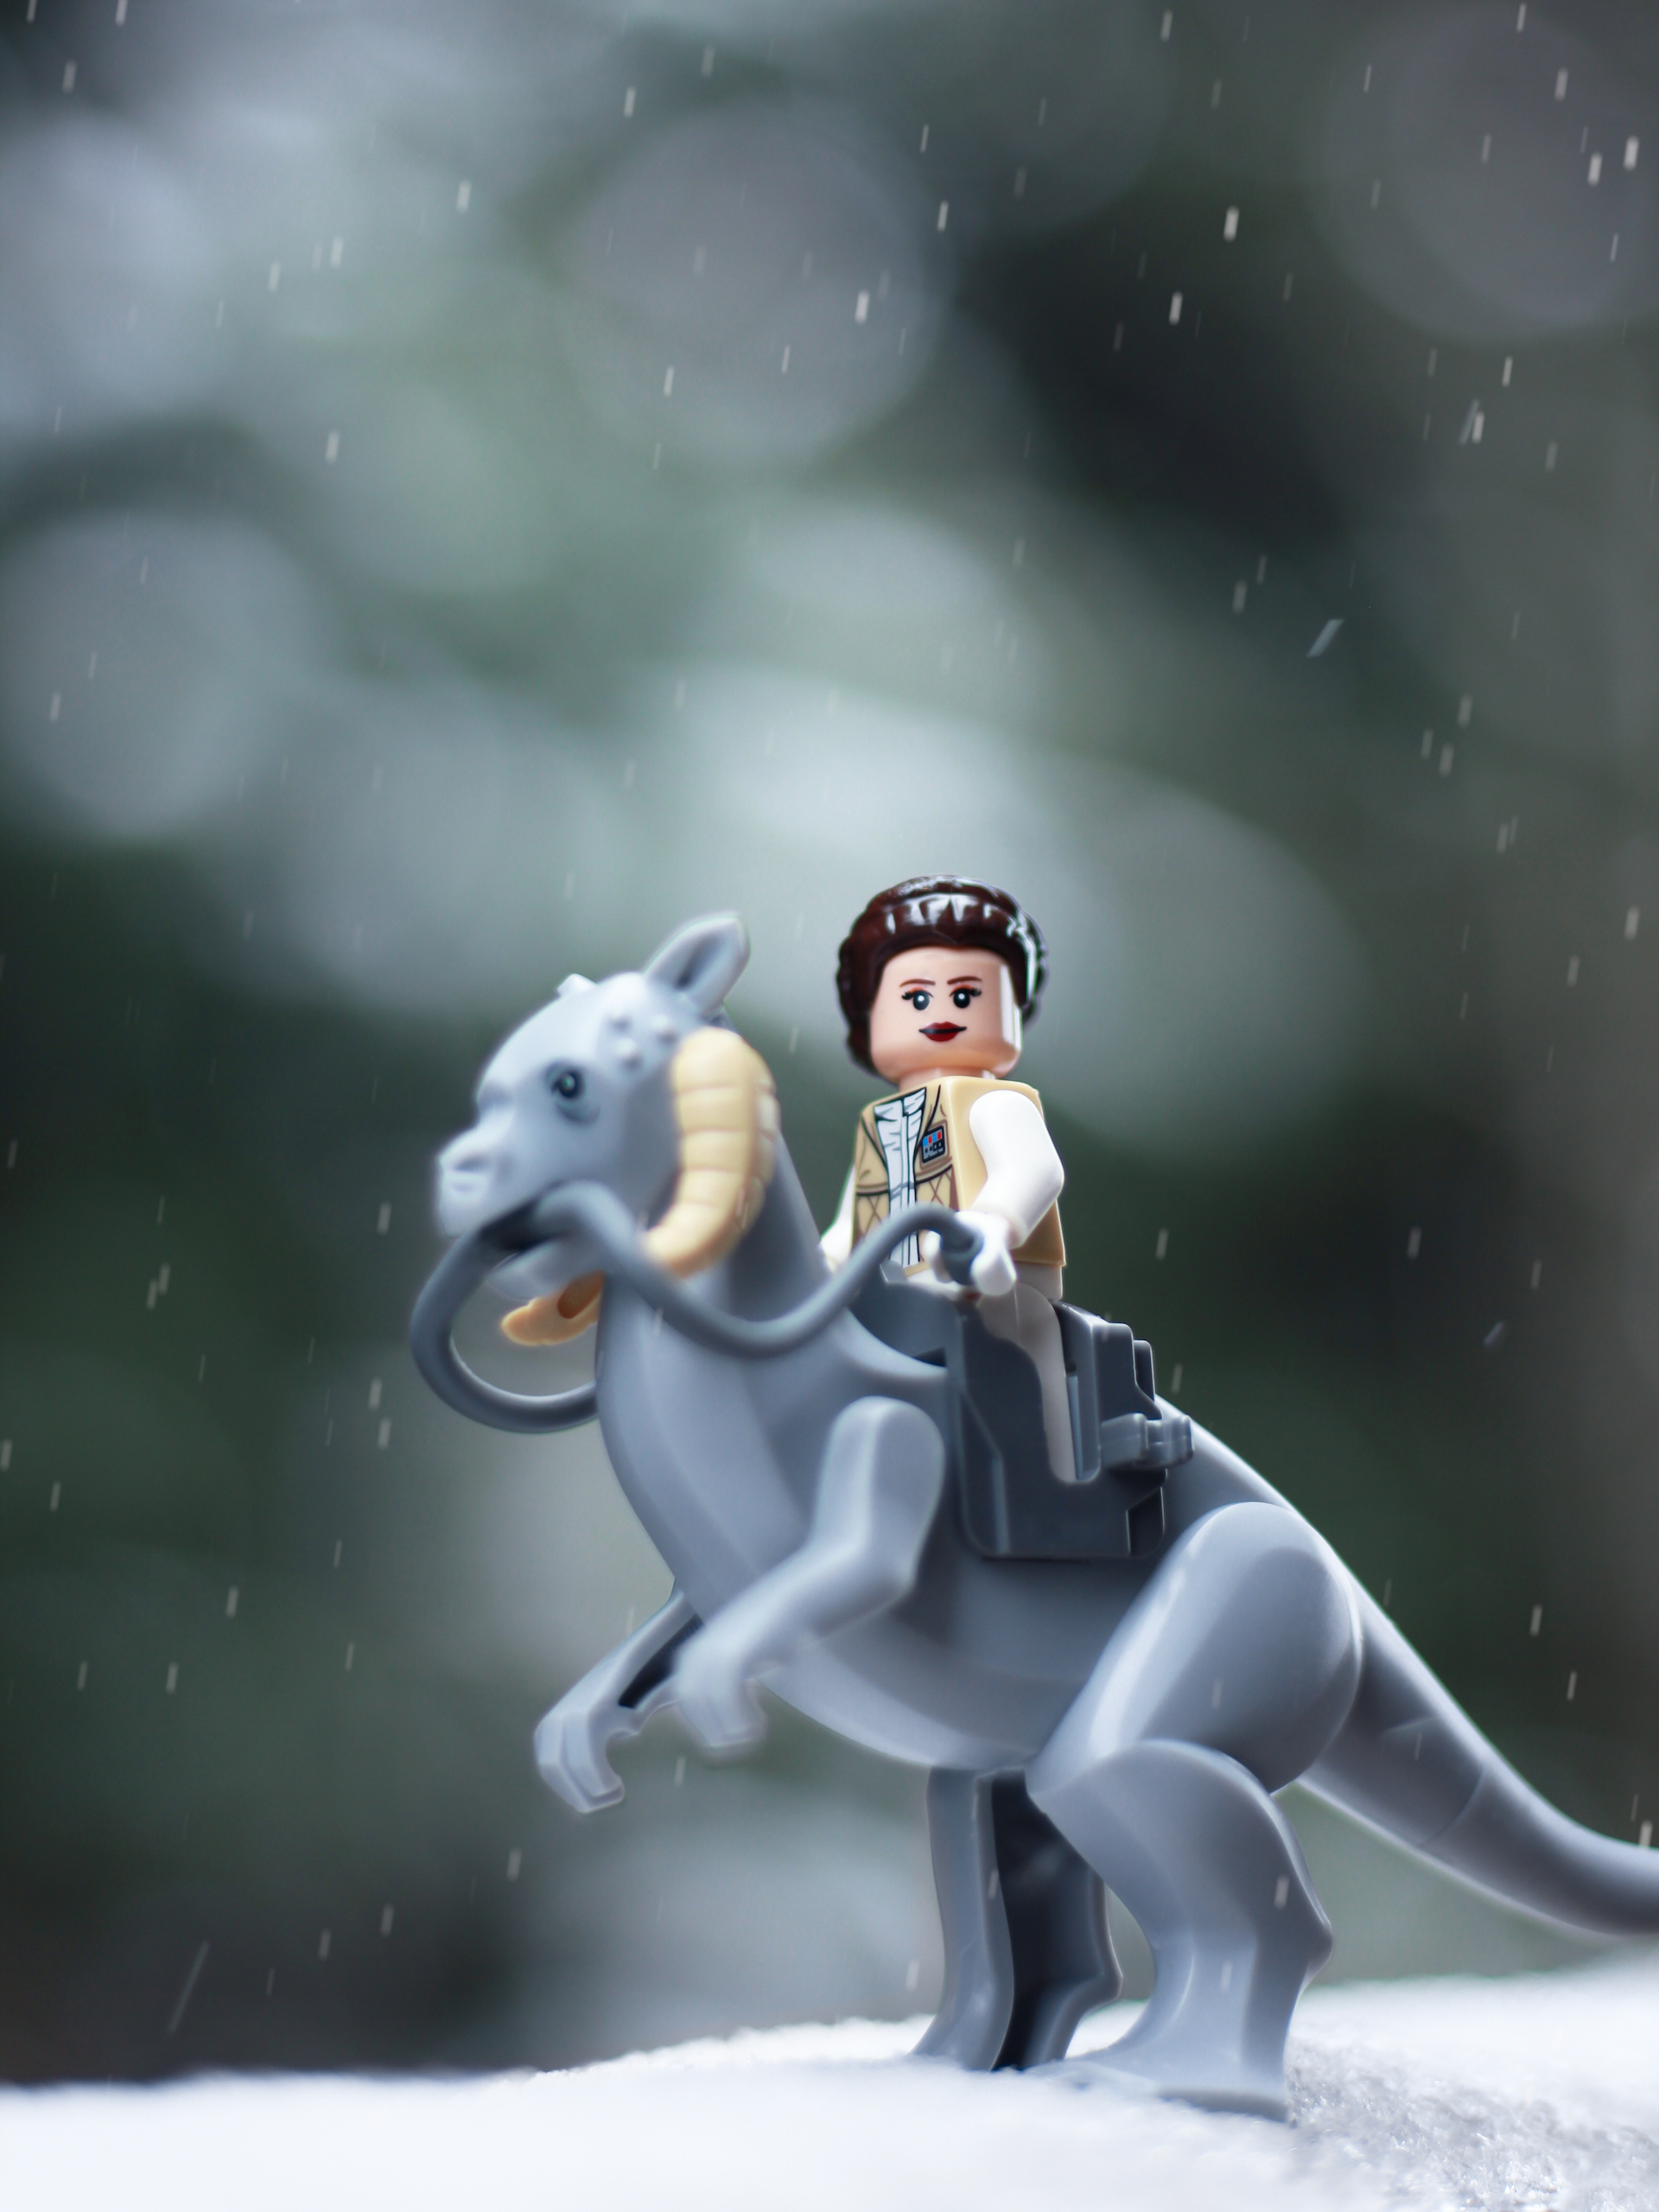 lego star wars princess leia riding a tauntaun in the snow